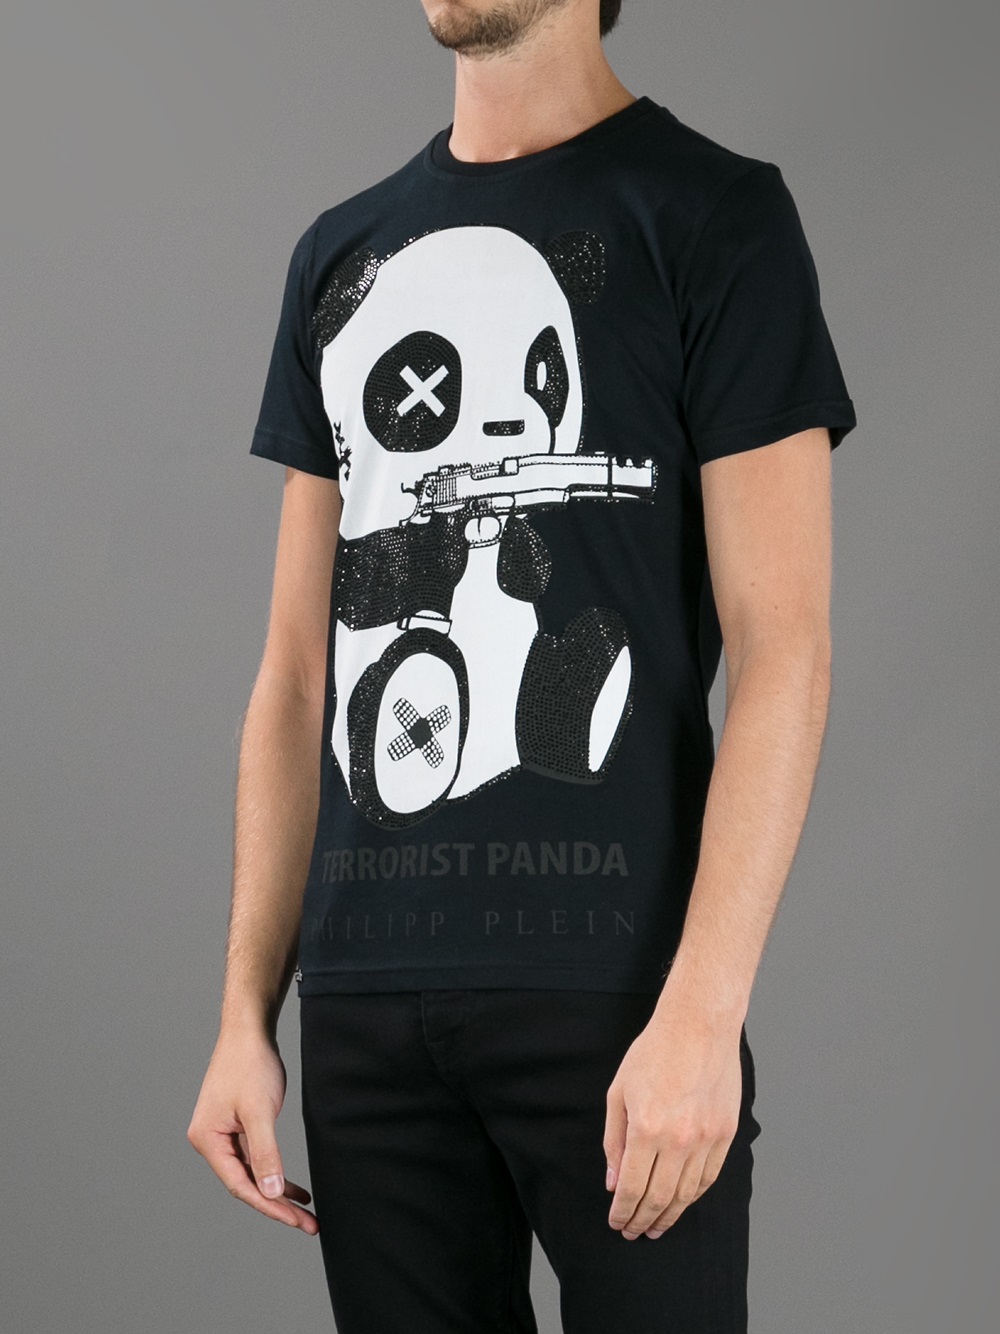 Philipp Plein Terrorist Panda Tshirt in Black for Men | Lyst